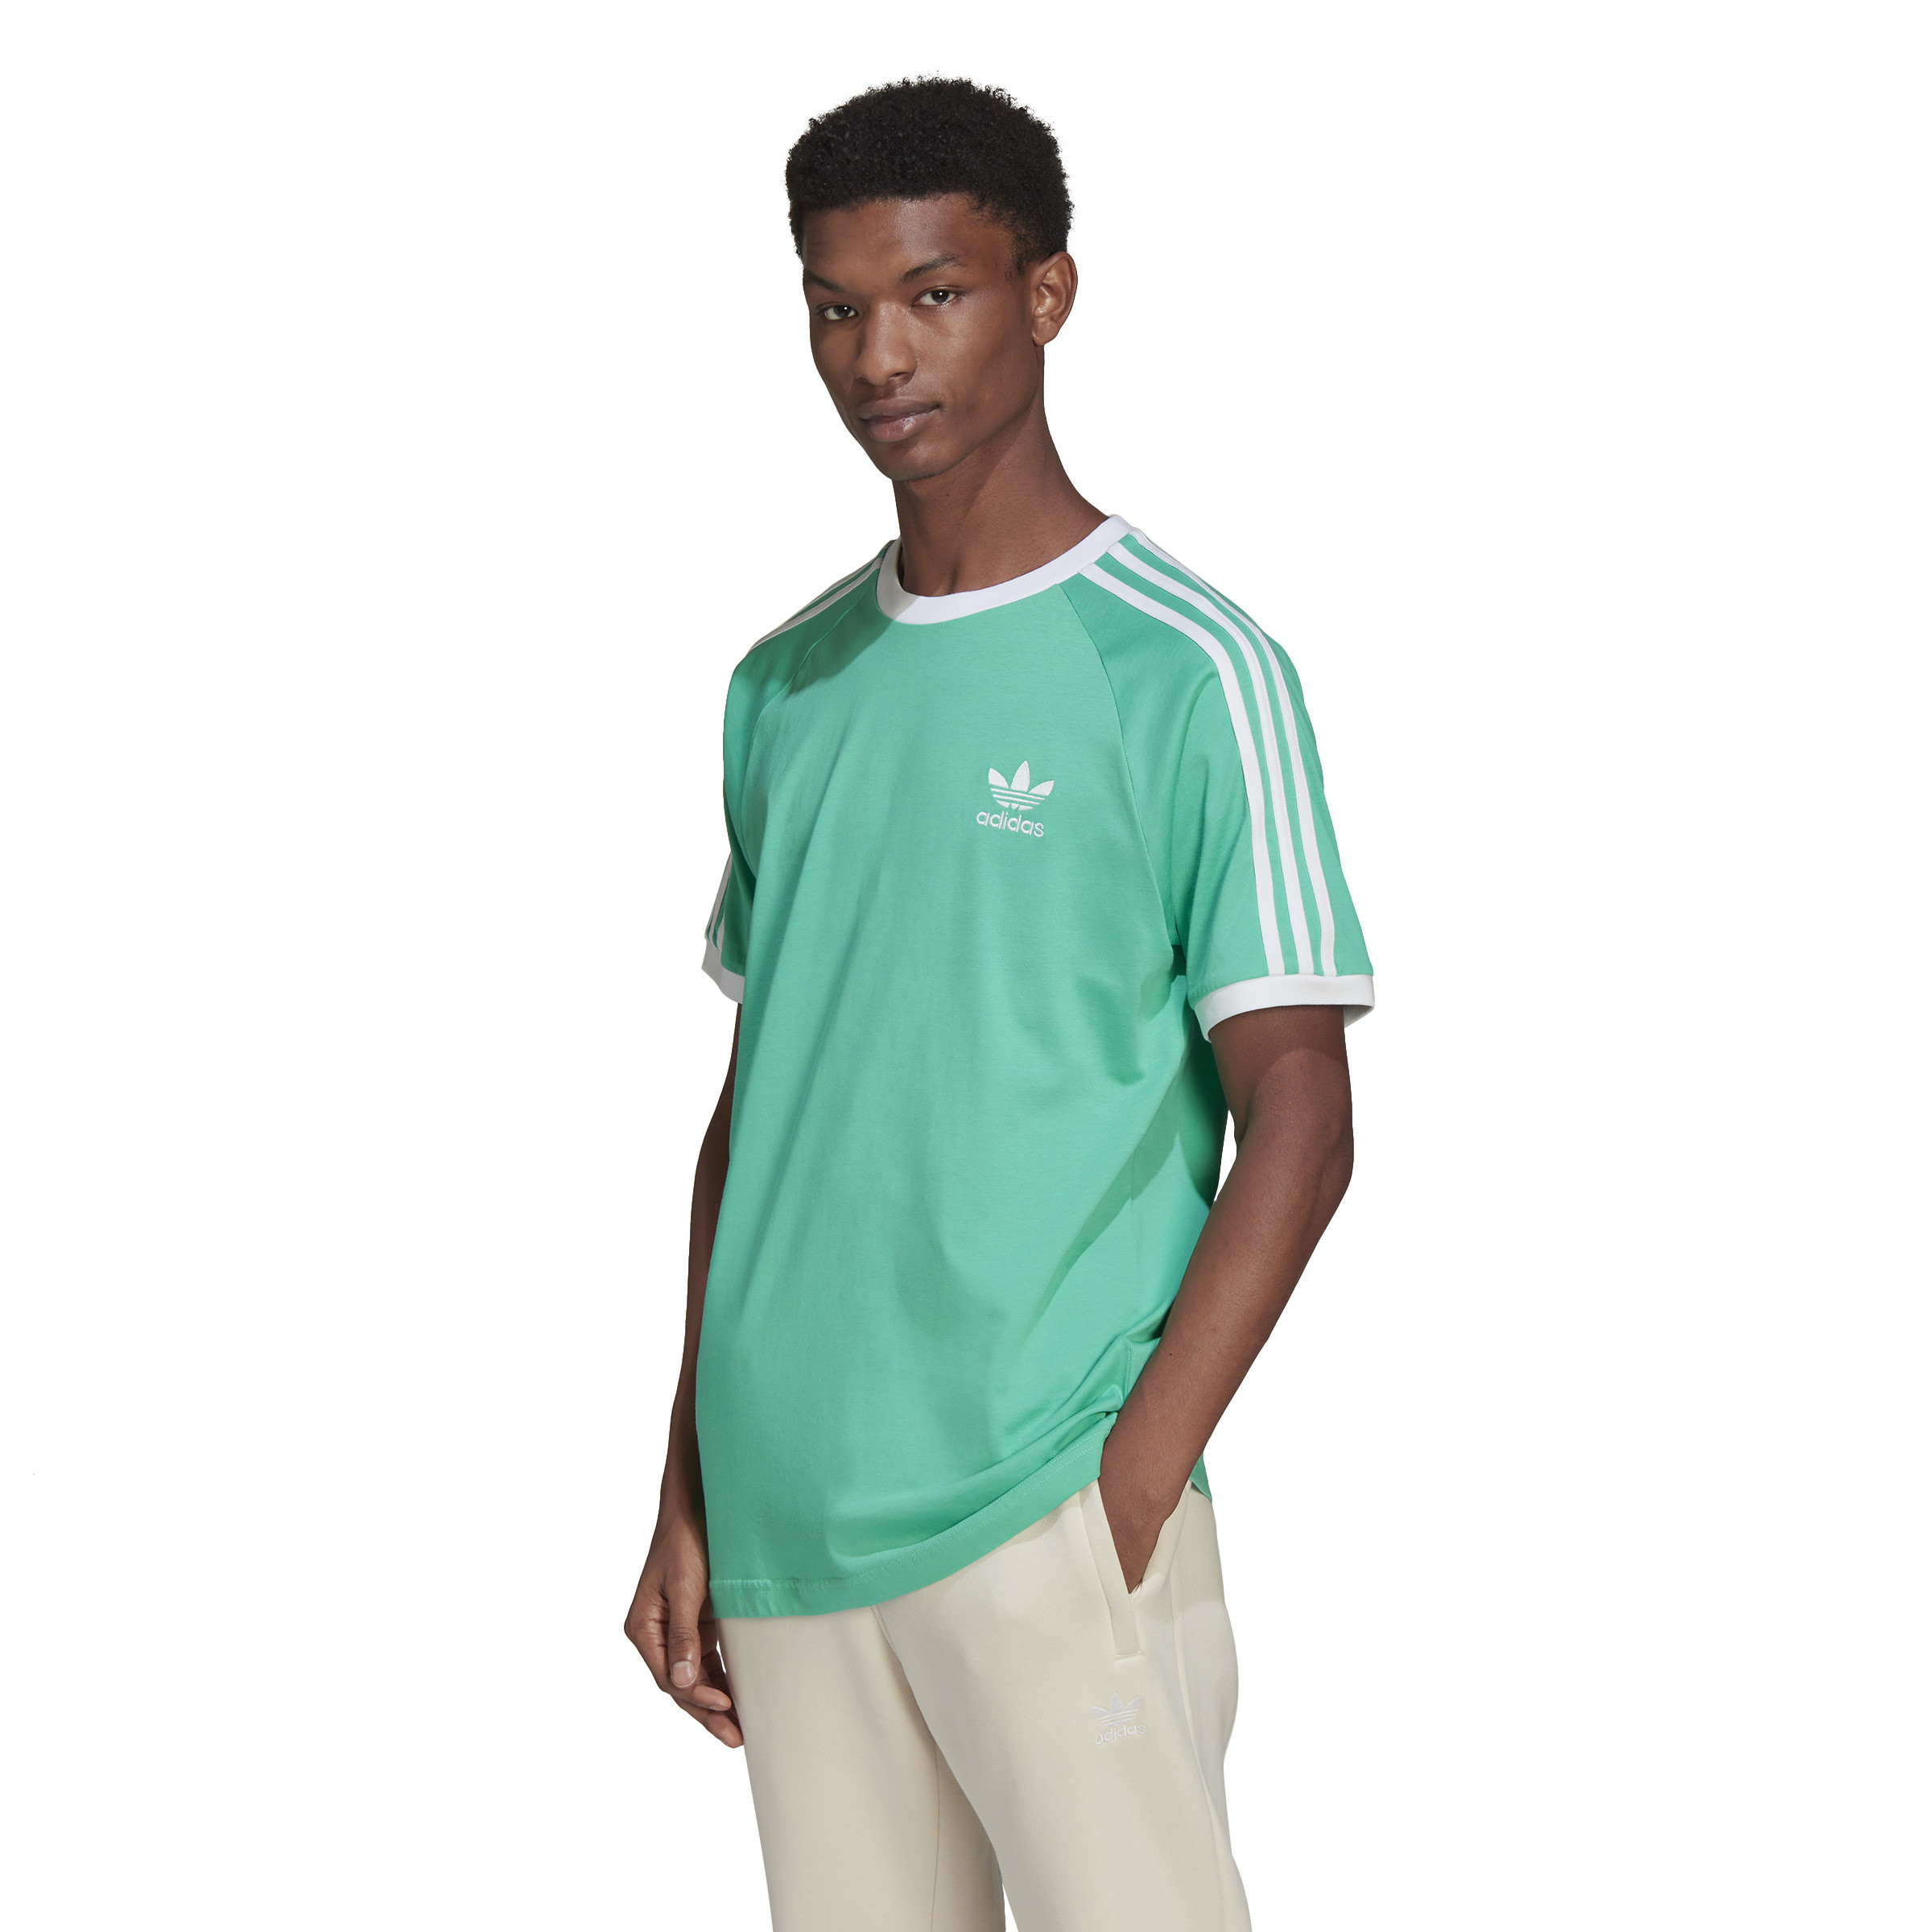 T-shirt adicolor classics 3-stripes, Verde, large